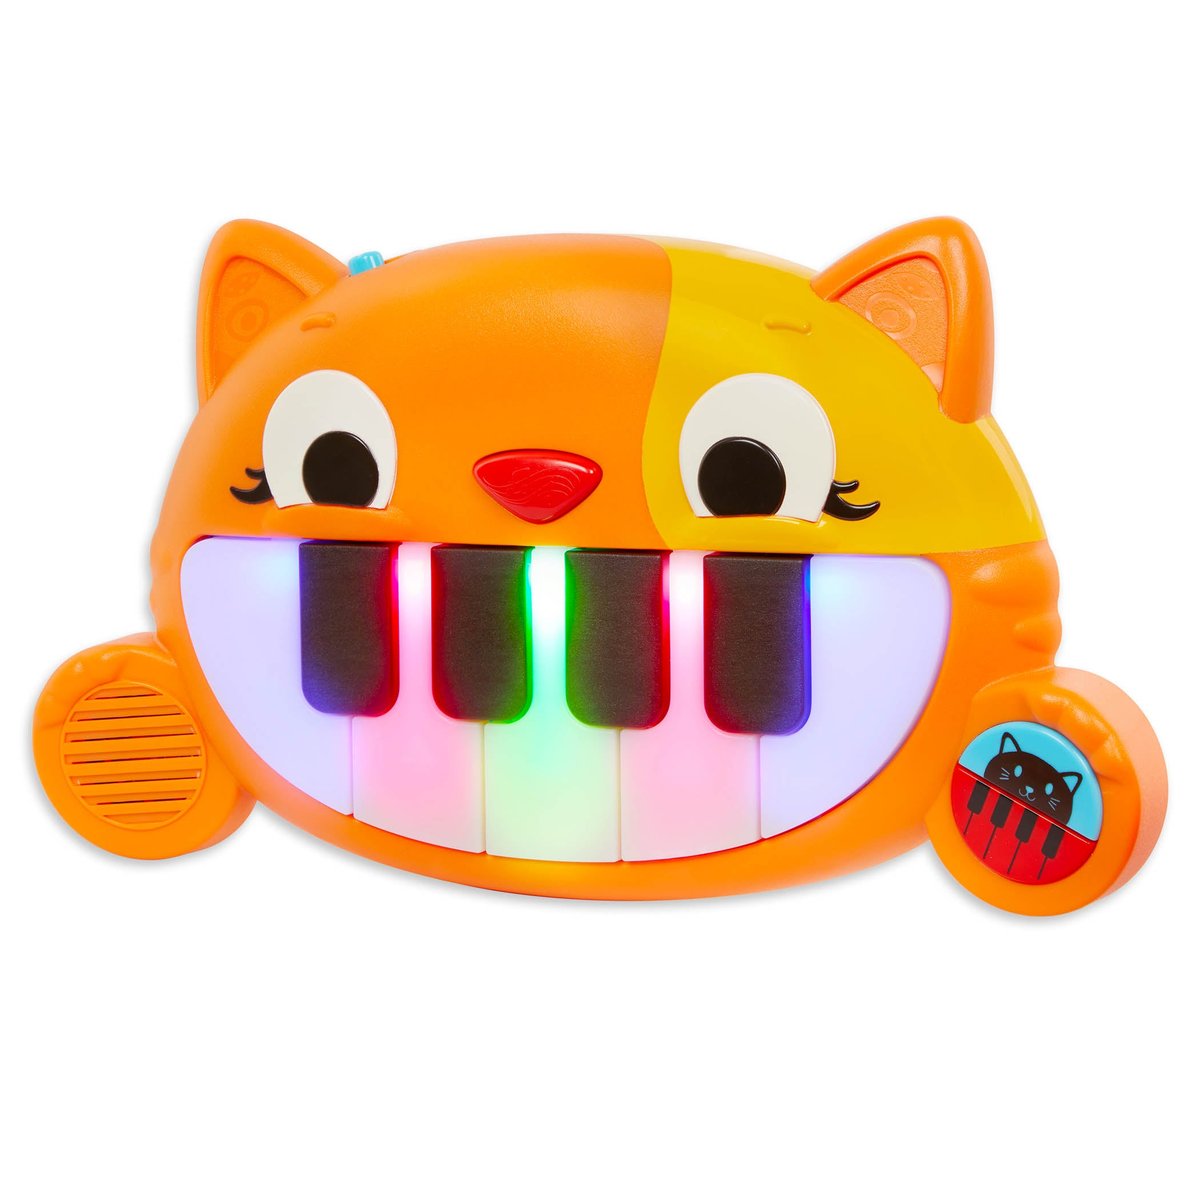 B.Toys Mini Meowsic mini-keyboard pianinko kotek